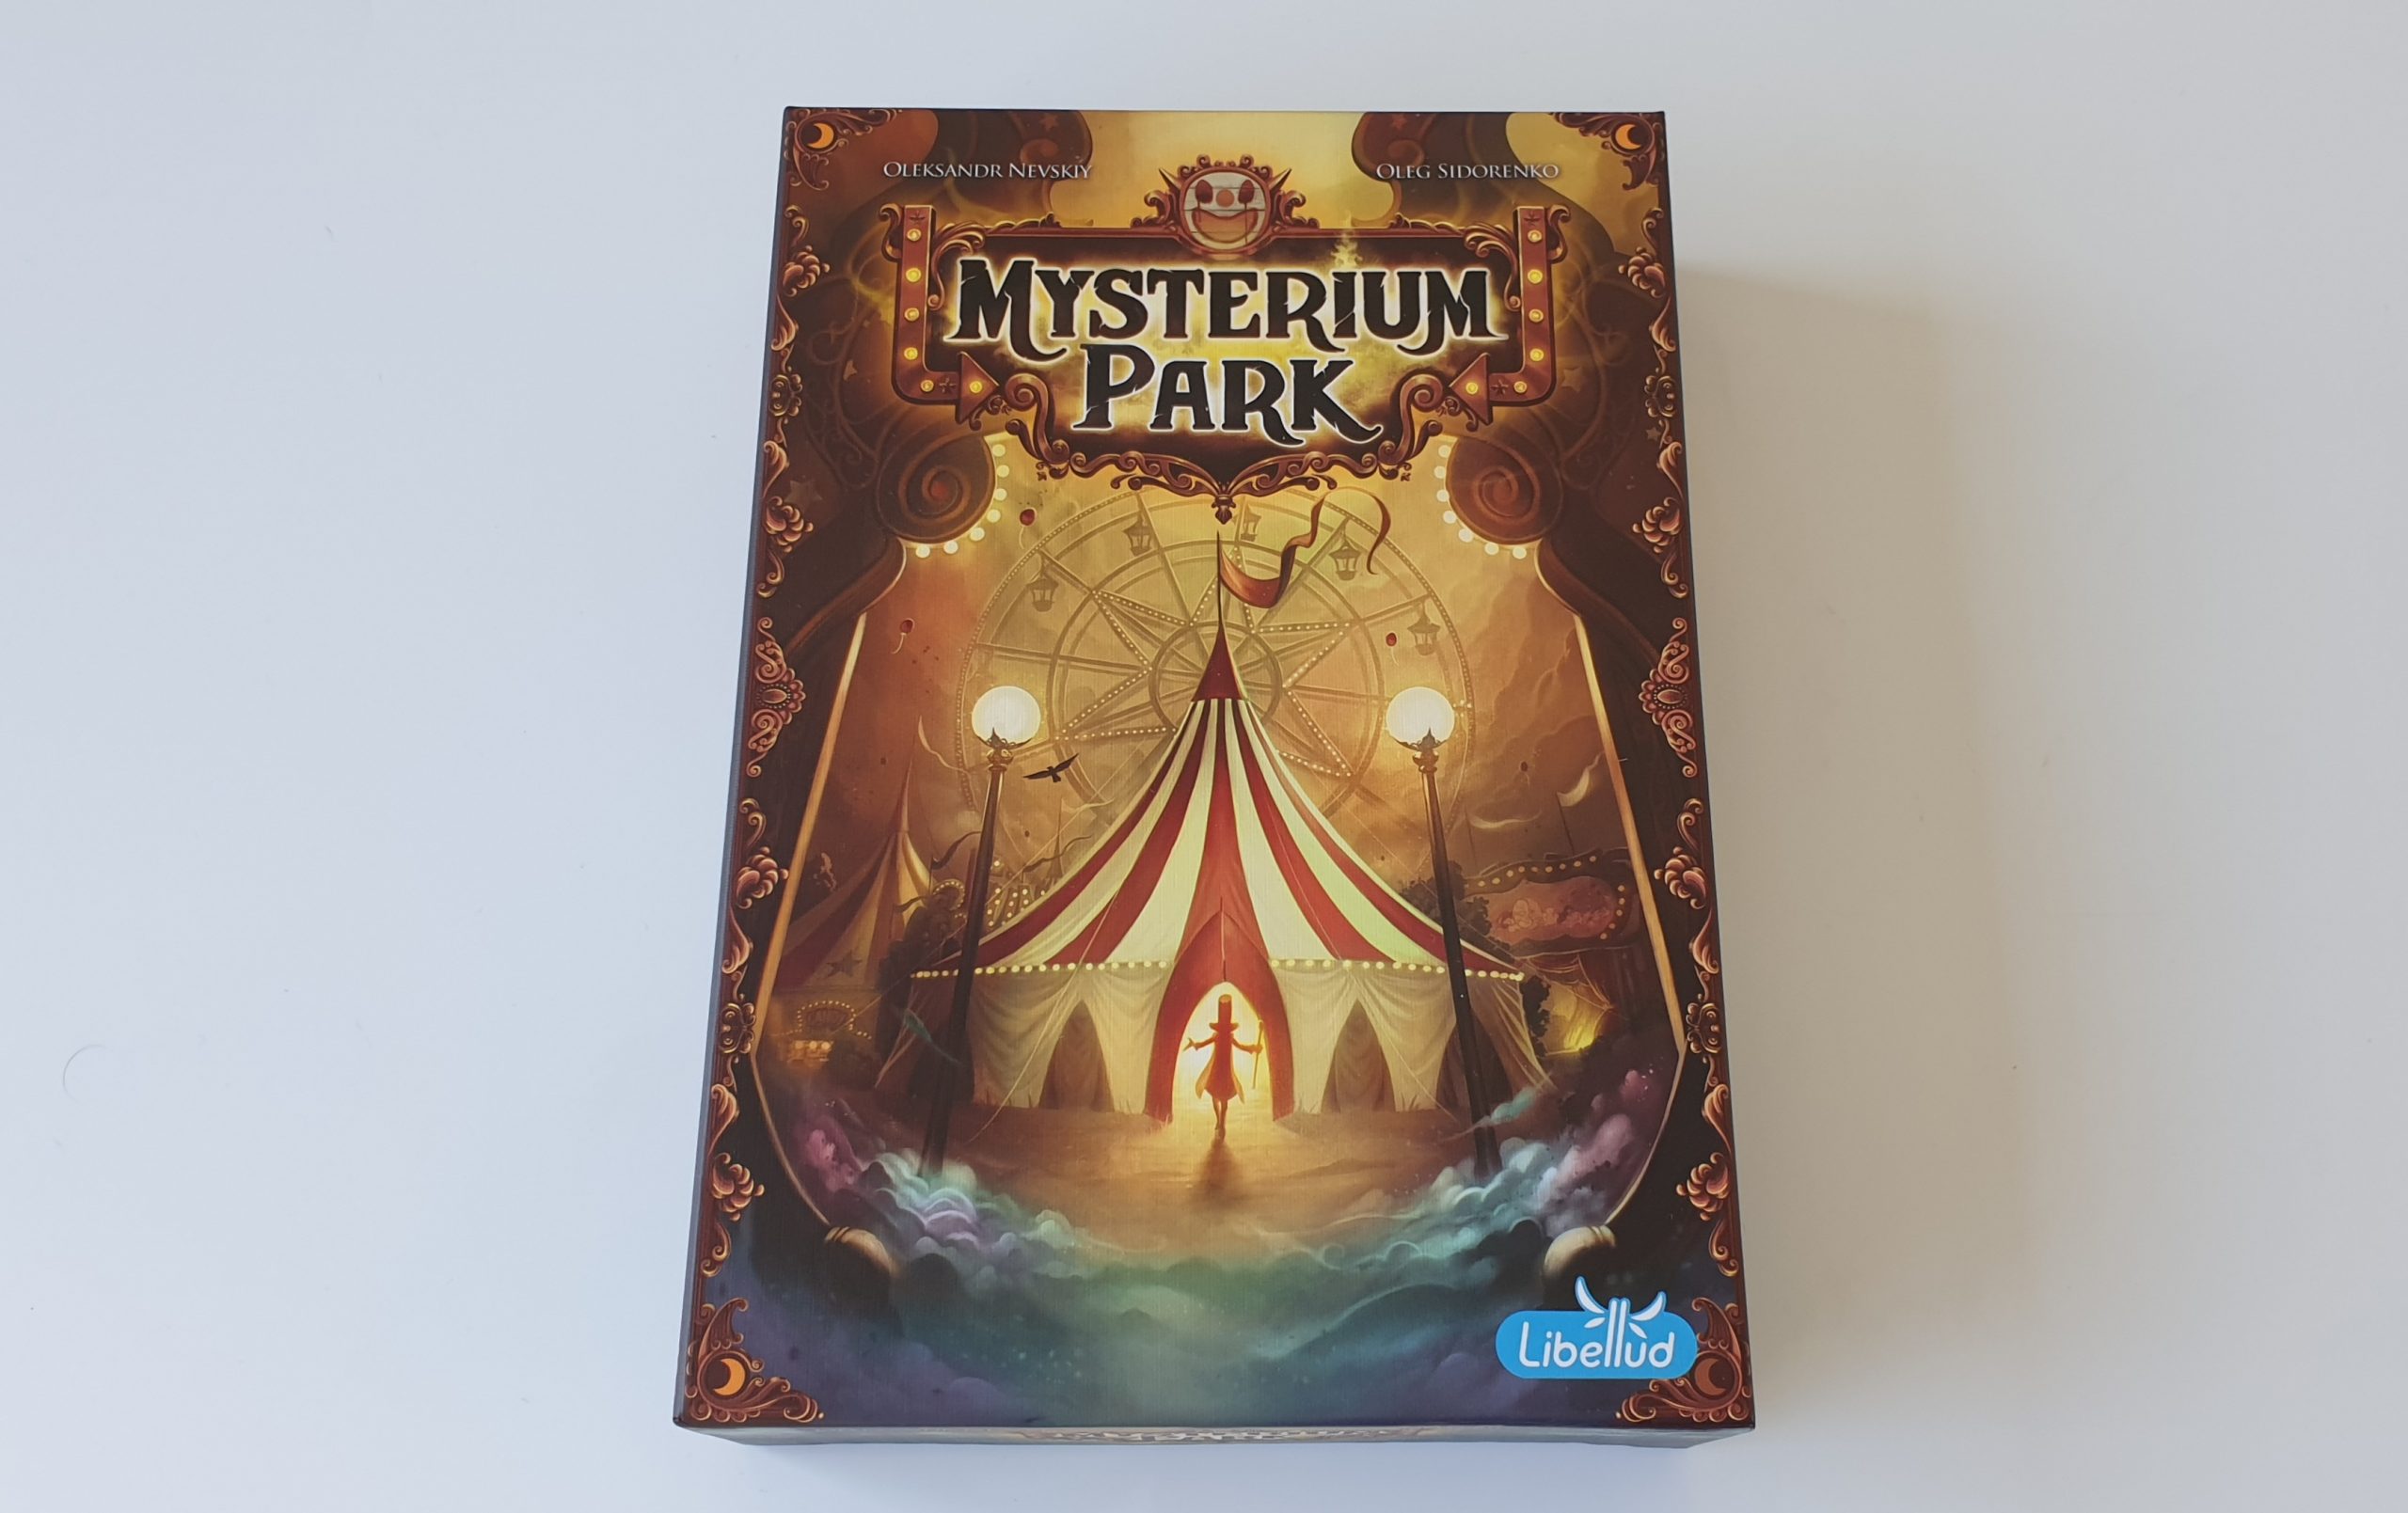 Mysterium Park Review – Better Than The Original?